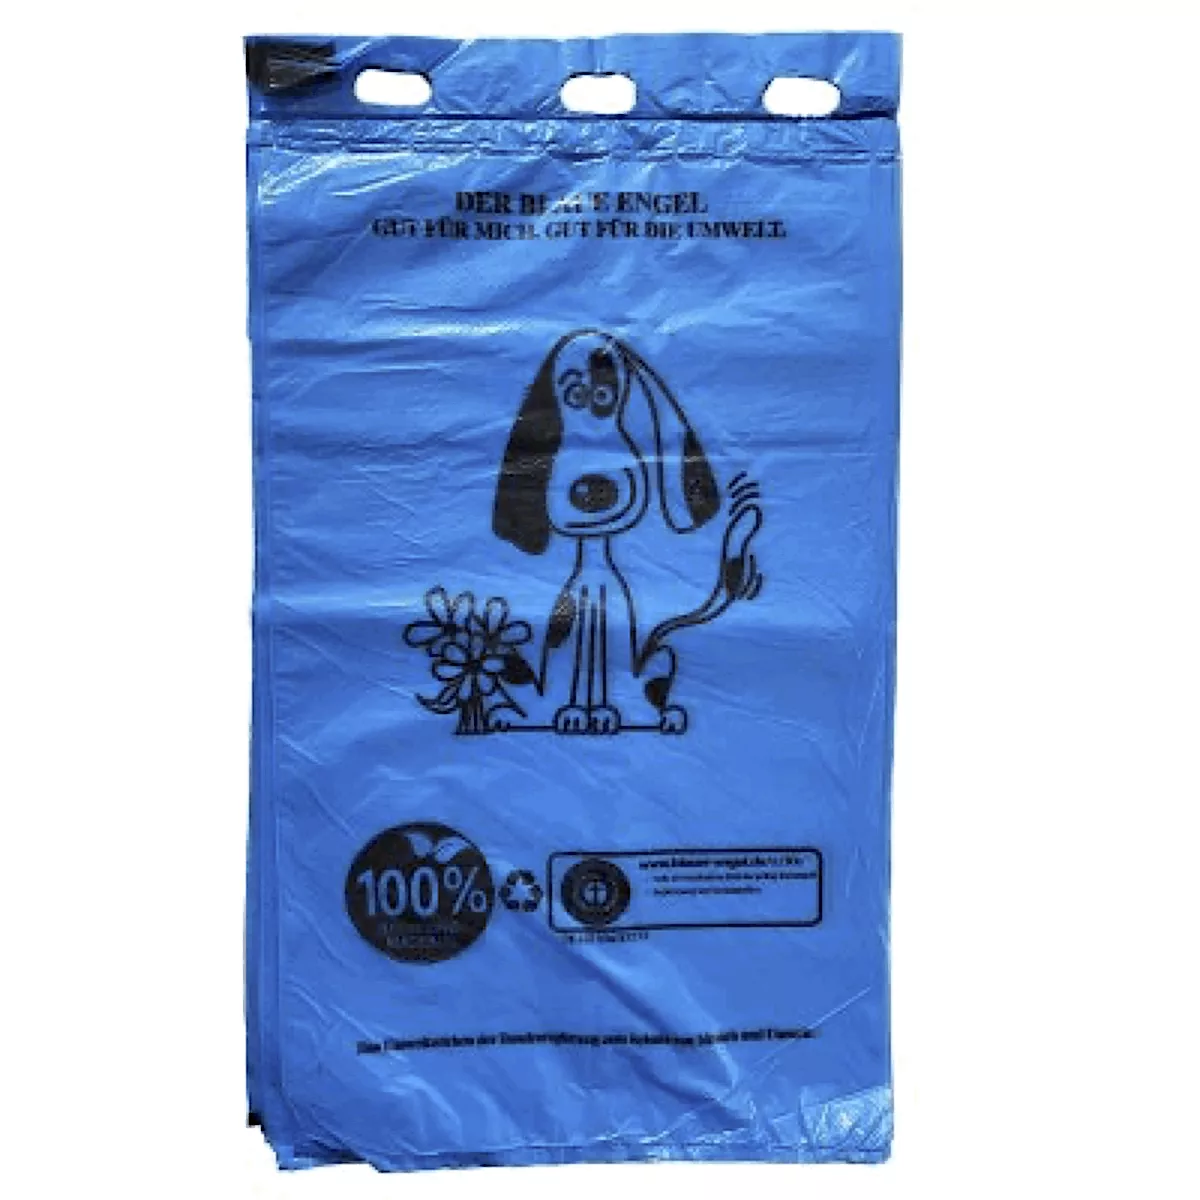 Hundekotbeutel Br. 200 x L. 345 mm, Dicke 20µ, blau, geblockt, (VE 50.000 Beutel)